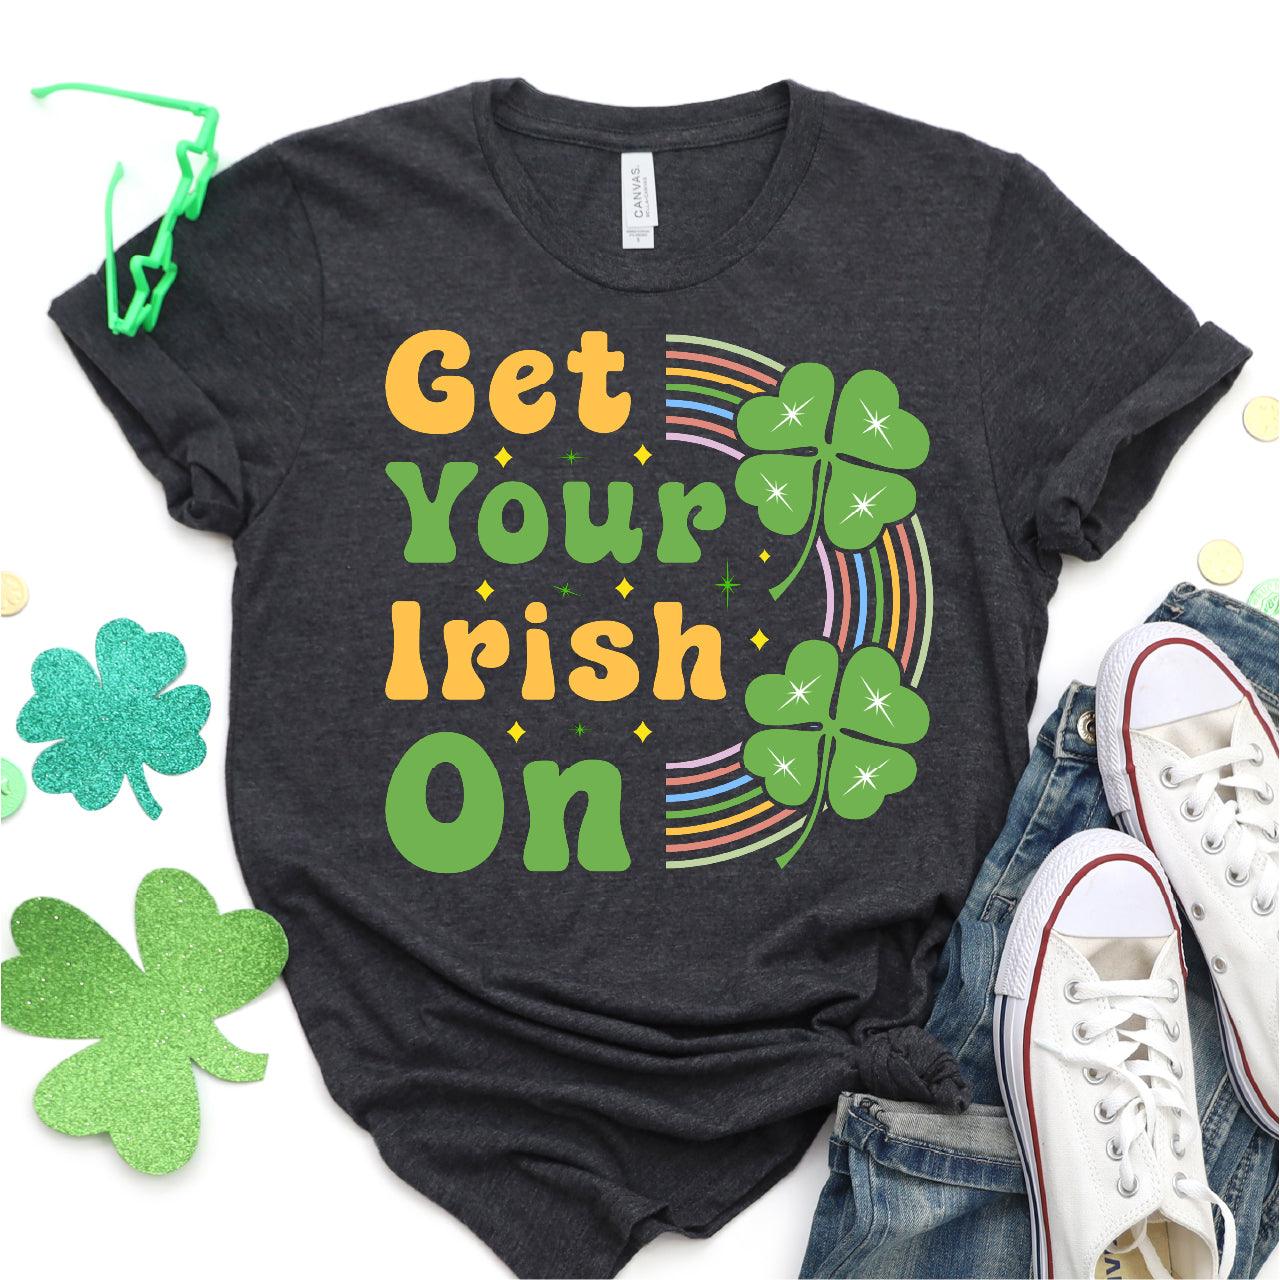 Get Your Irish On, Retro Rainbow DTF T-Shirt Transfer Nashville Design House